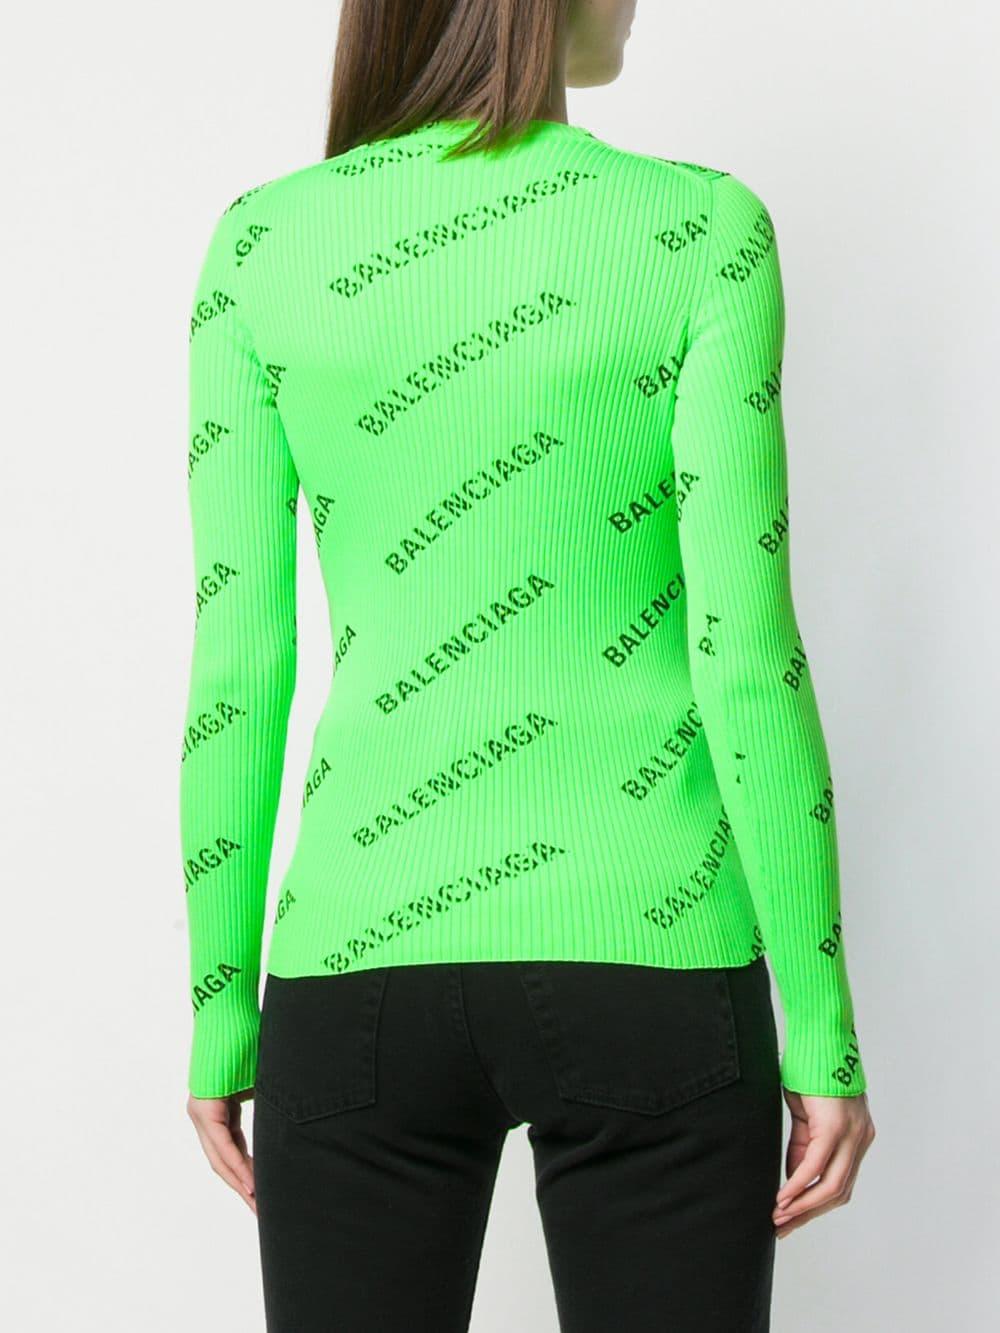 Balenciaga Allover Logo Sweater in Green - Lyst